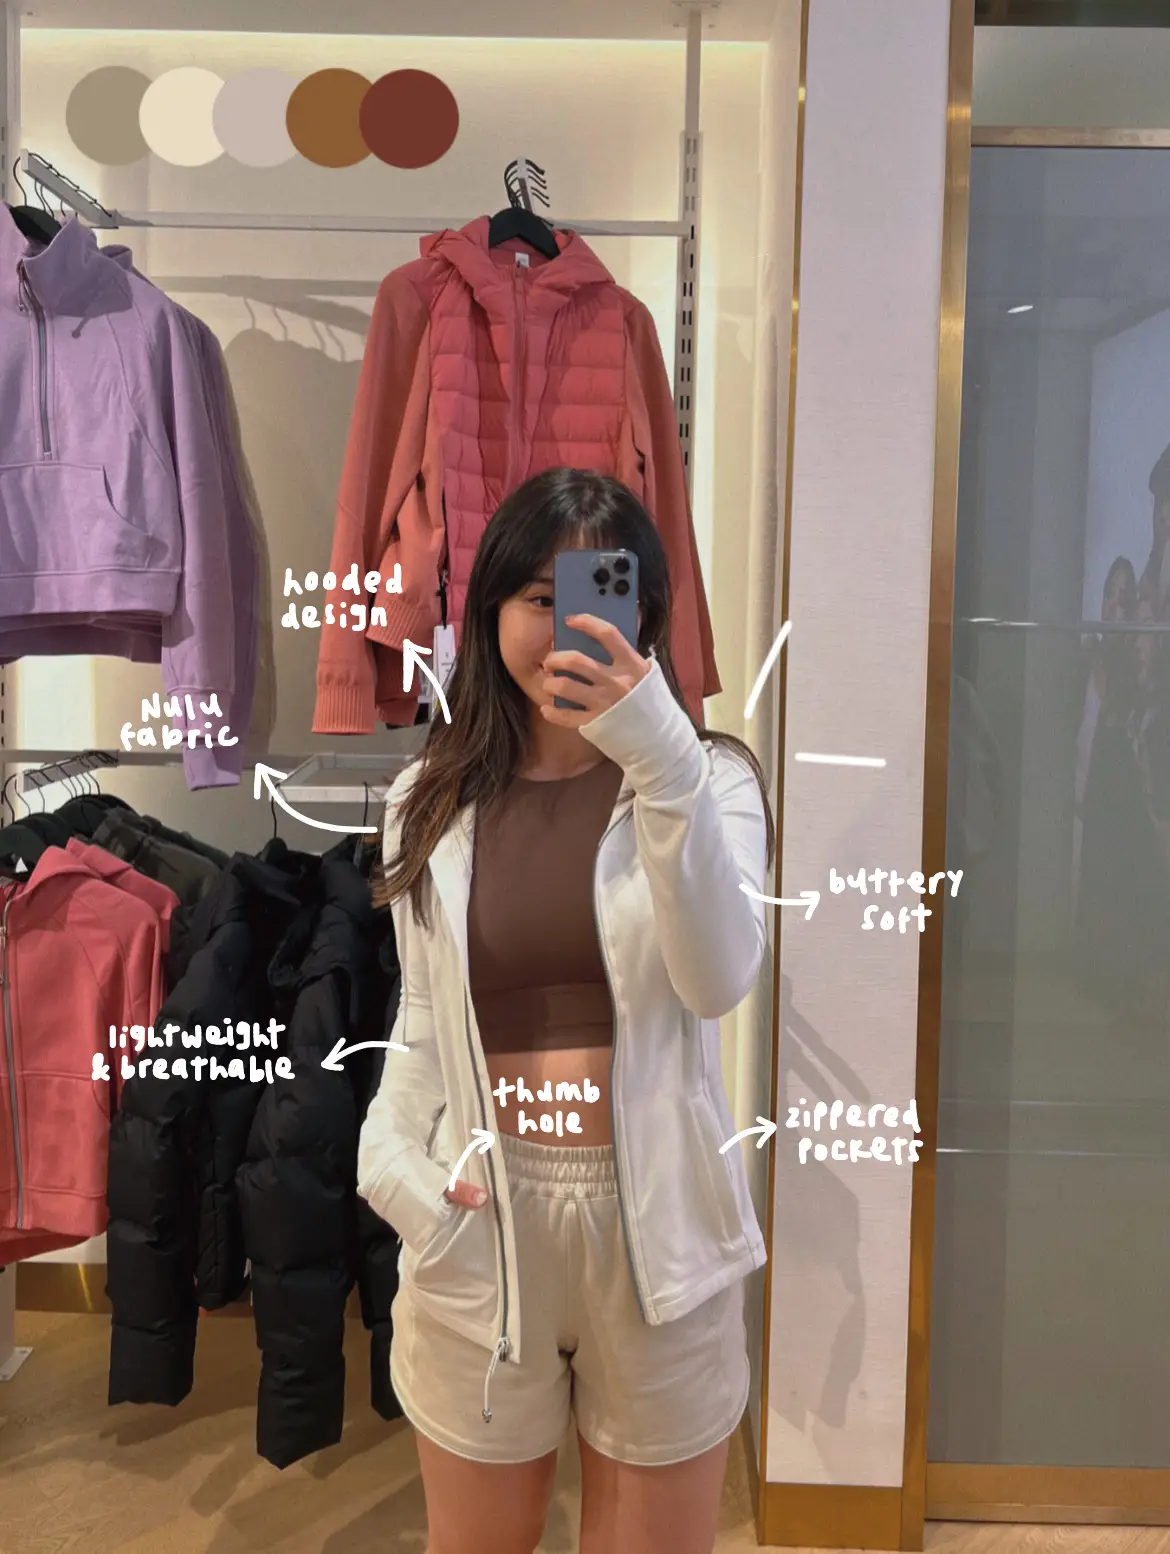 Lululemon jacket: The Define Jacket is going viral on TikTok